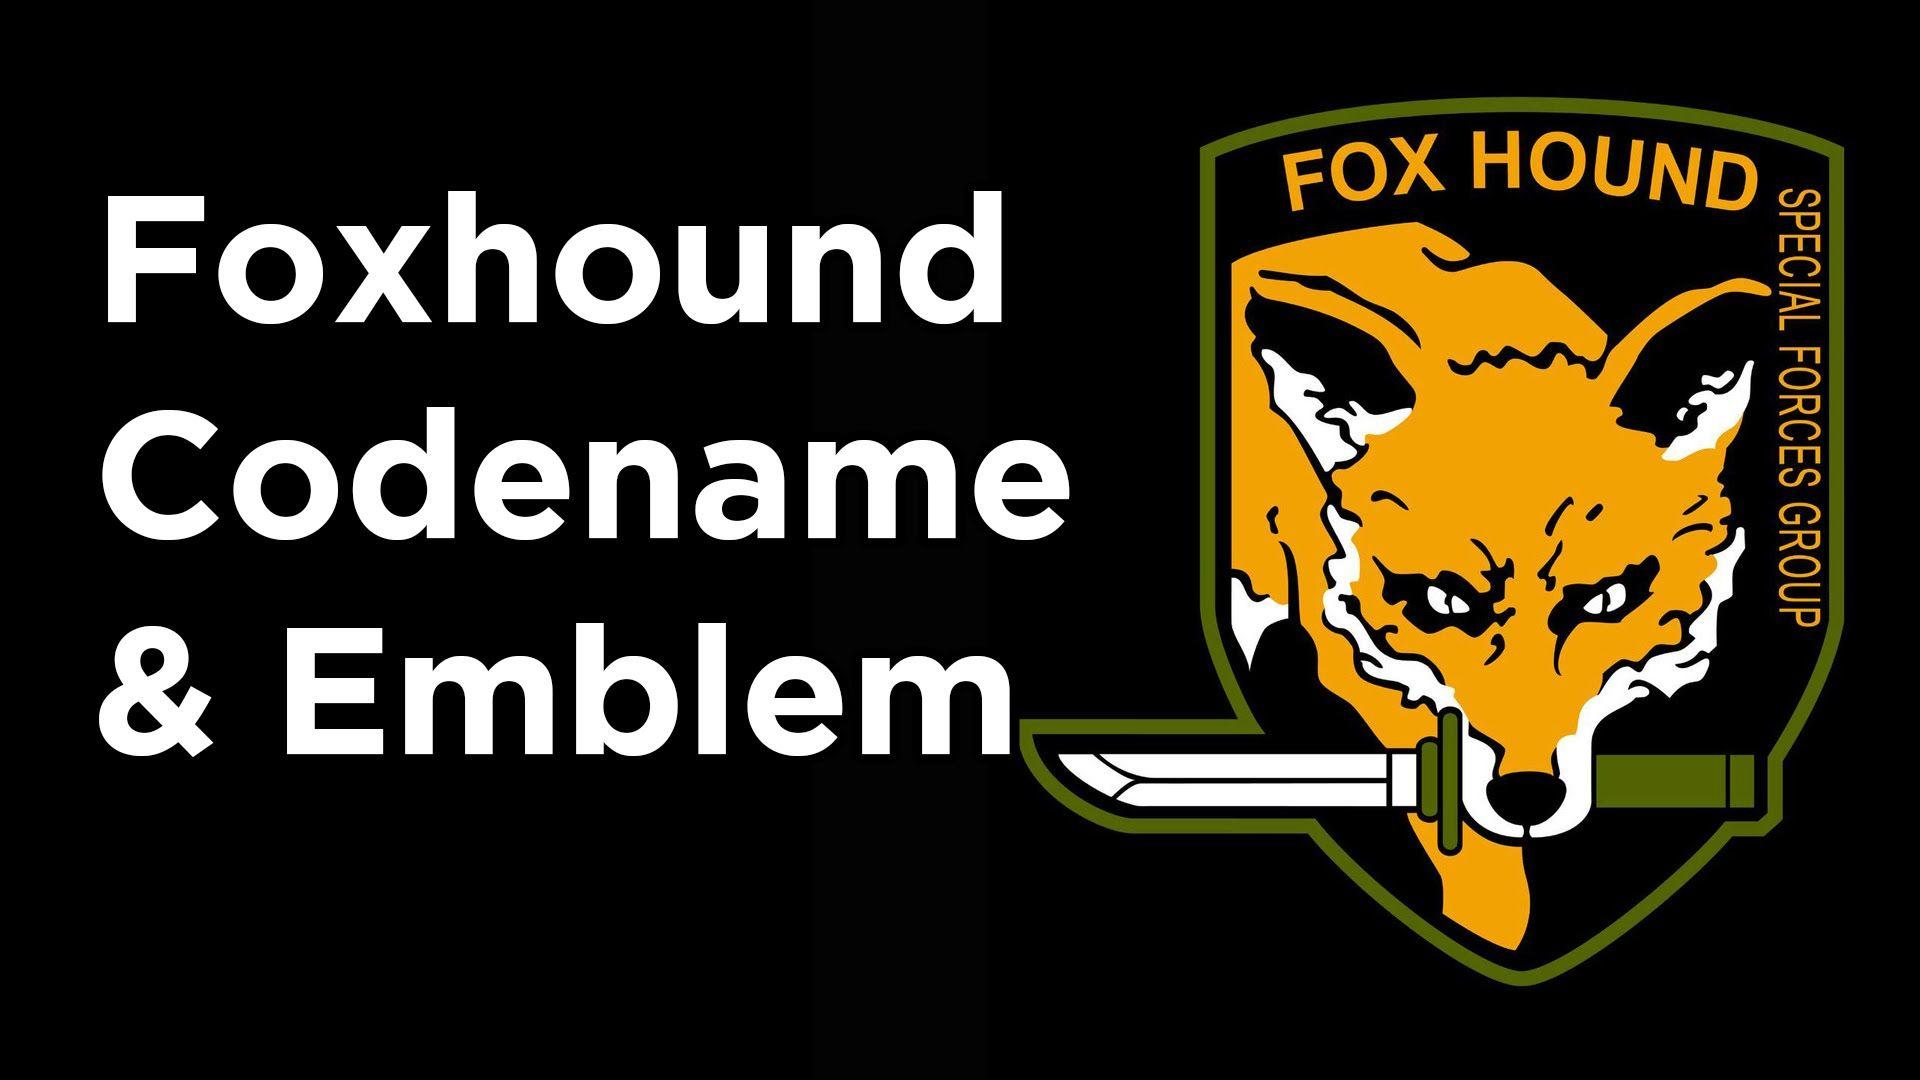 Metal Gear Solid V Foxhound Codename & Emblem easy way